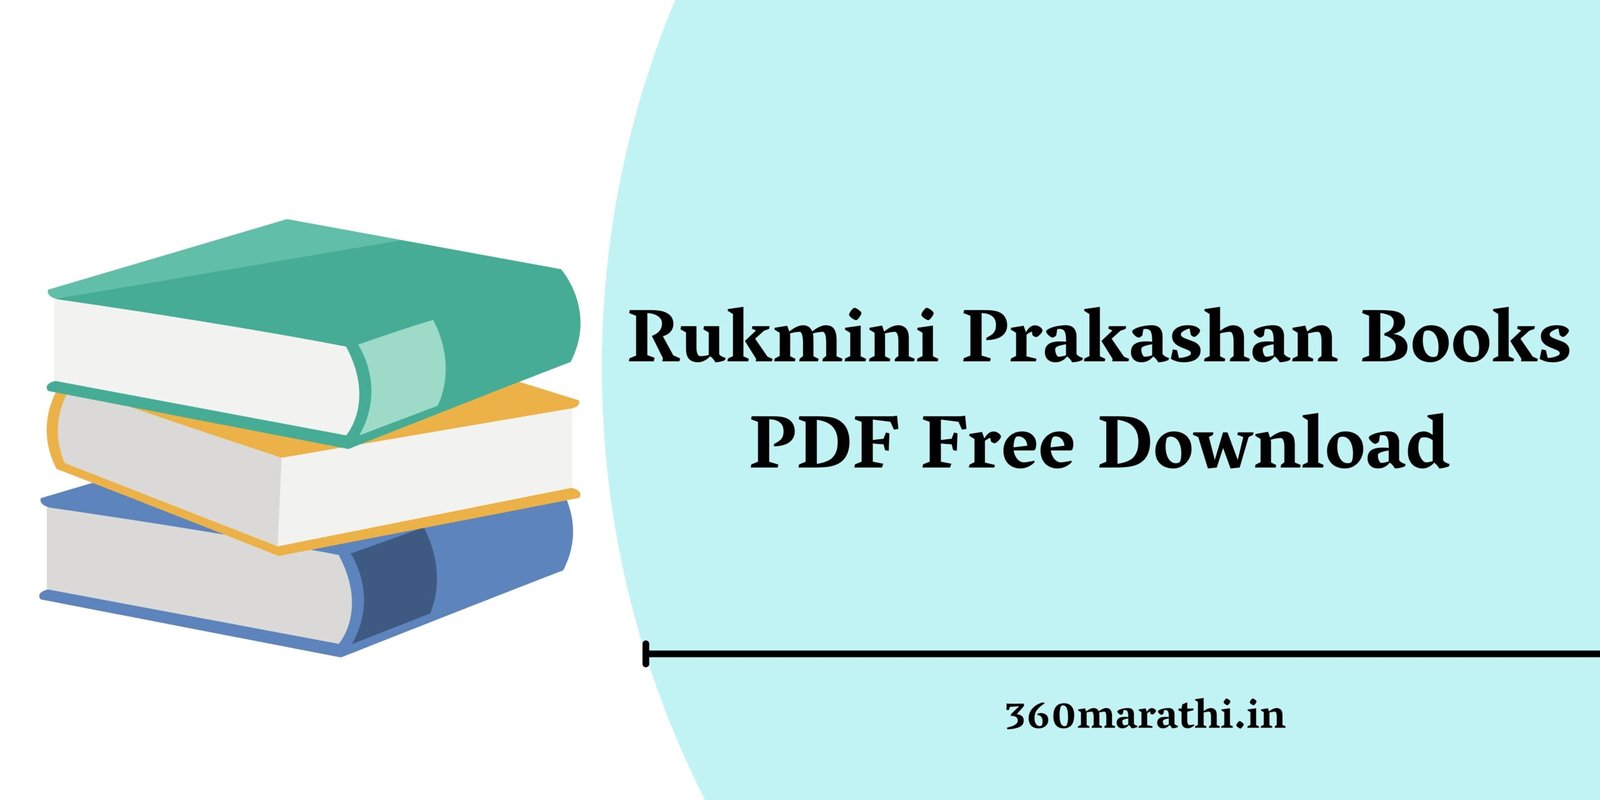 Rukmini Prakashan Books PDF Free Download